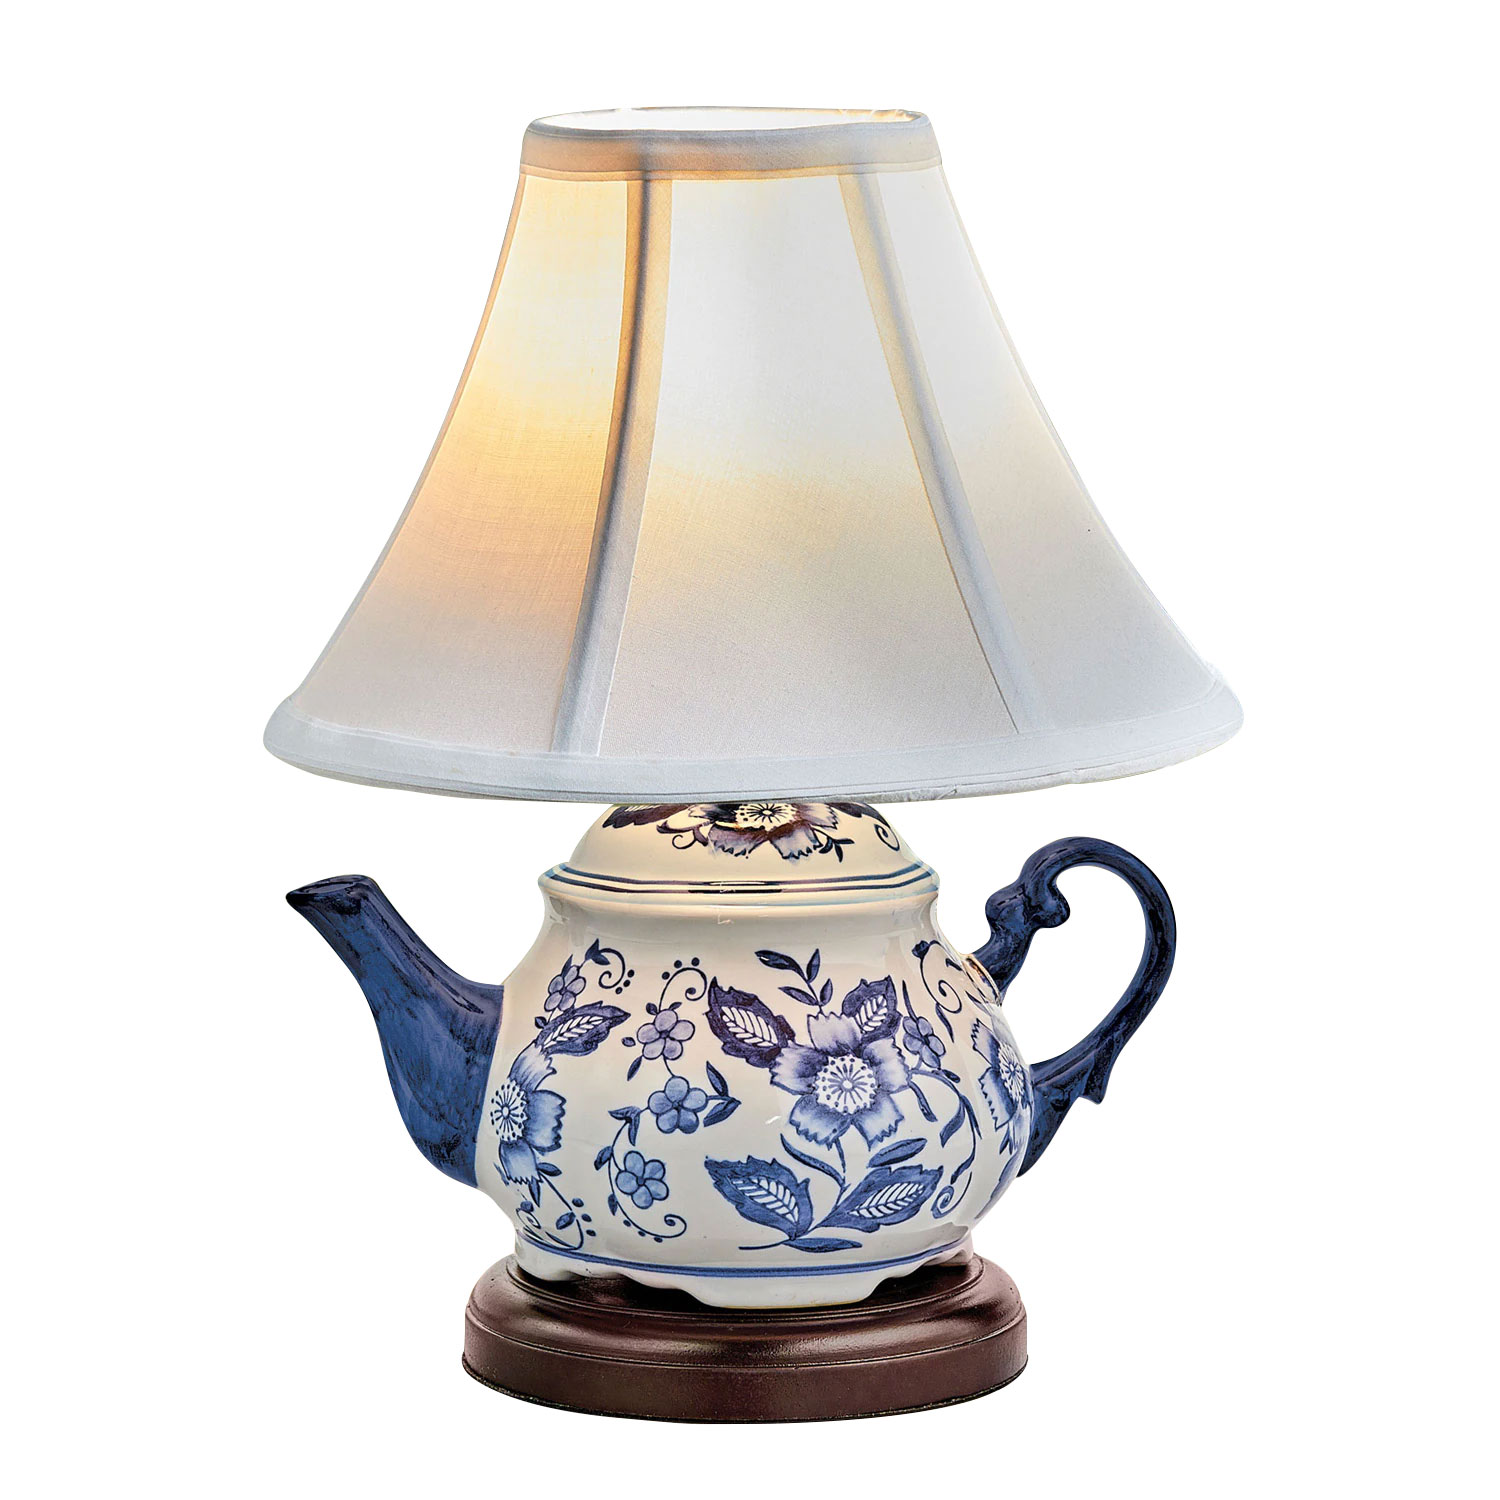 ART & ARTIFACT Ceramic Teapot Lamp - Delft Blue Tea Kettle Light with Shade